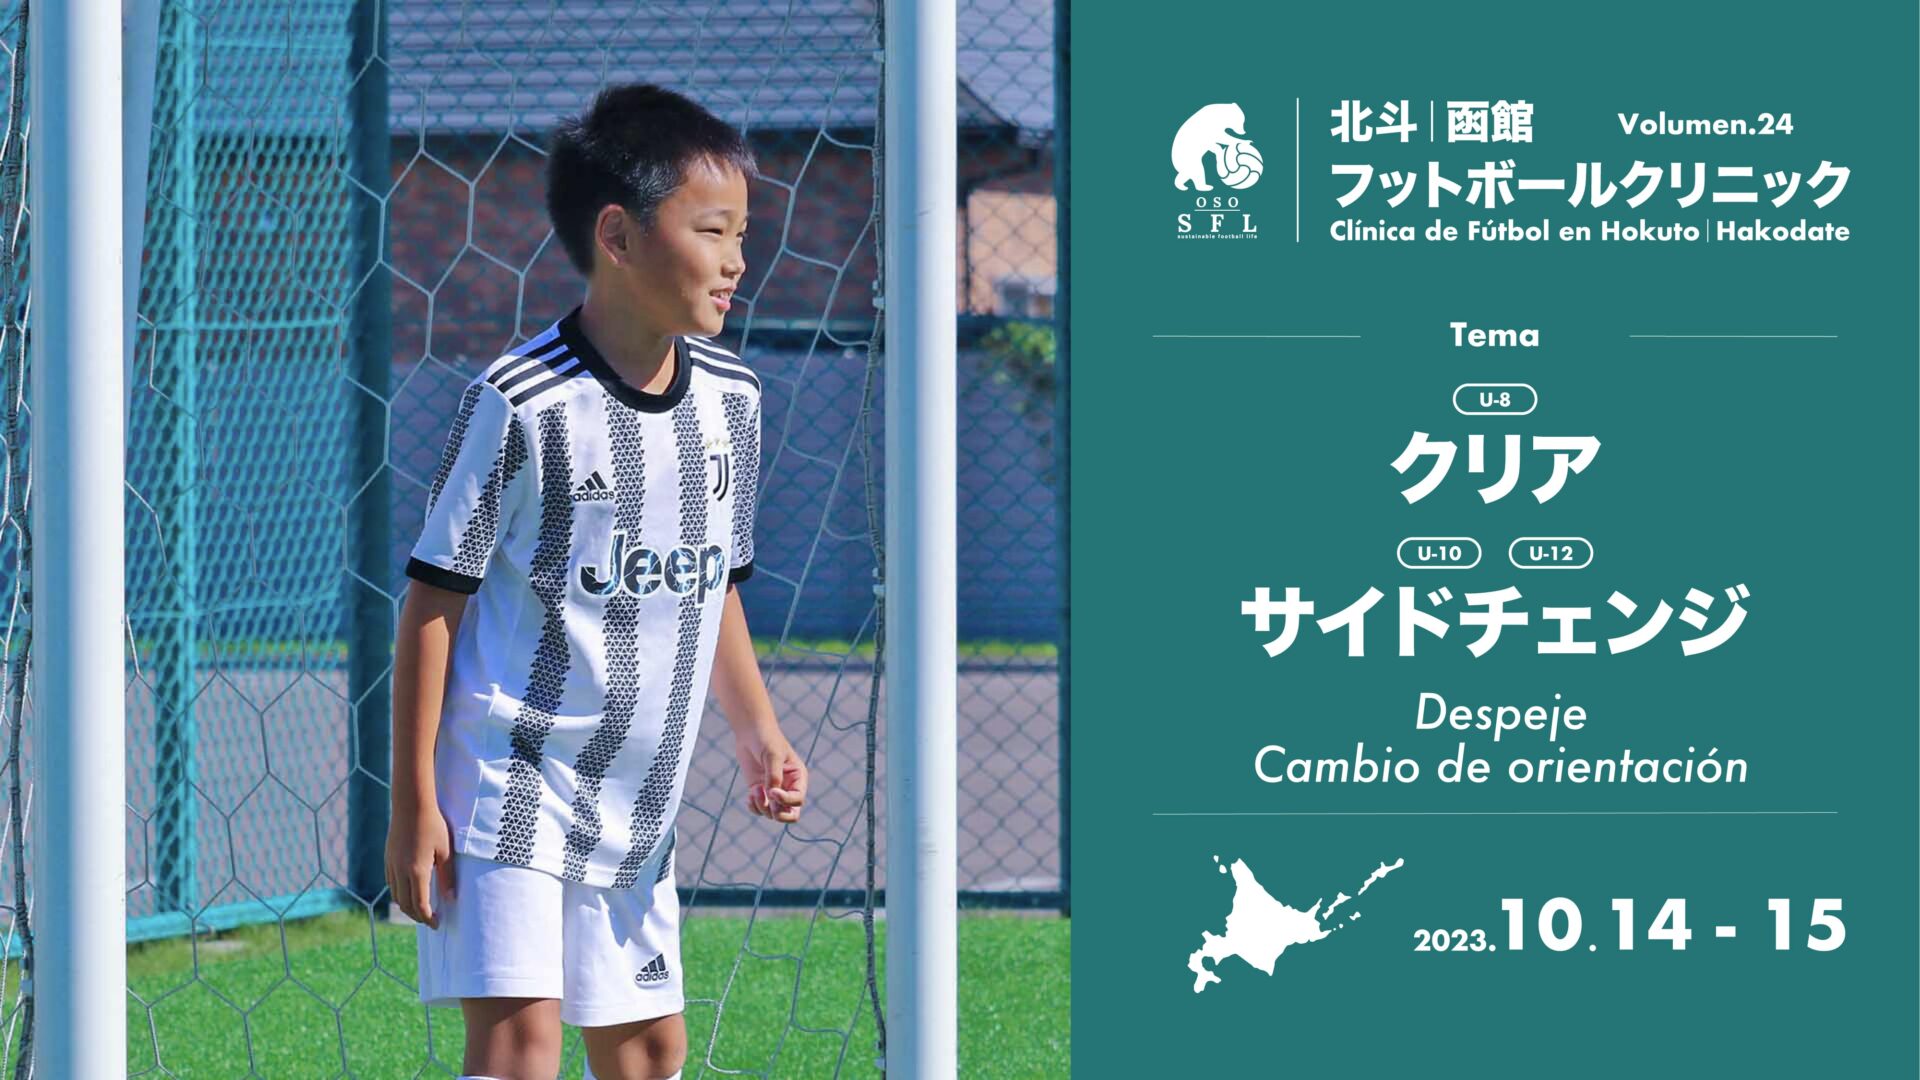 20230927_notice-hokuto-hakodate-football-clinic-2023-vol24_1920px-min